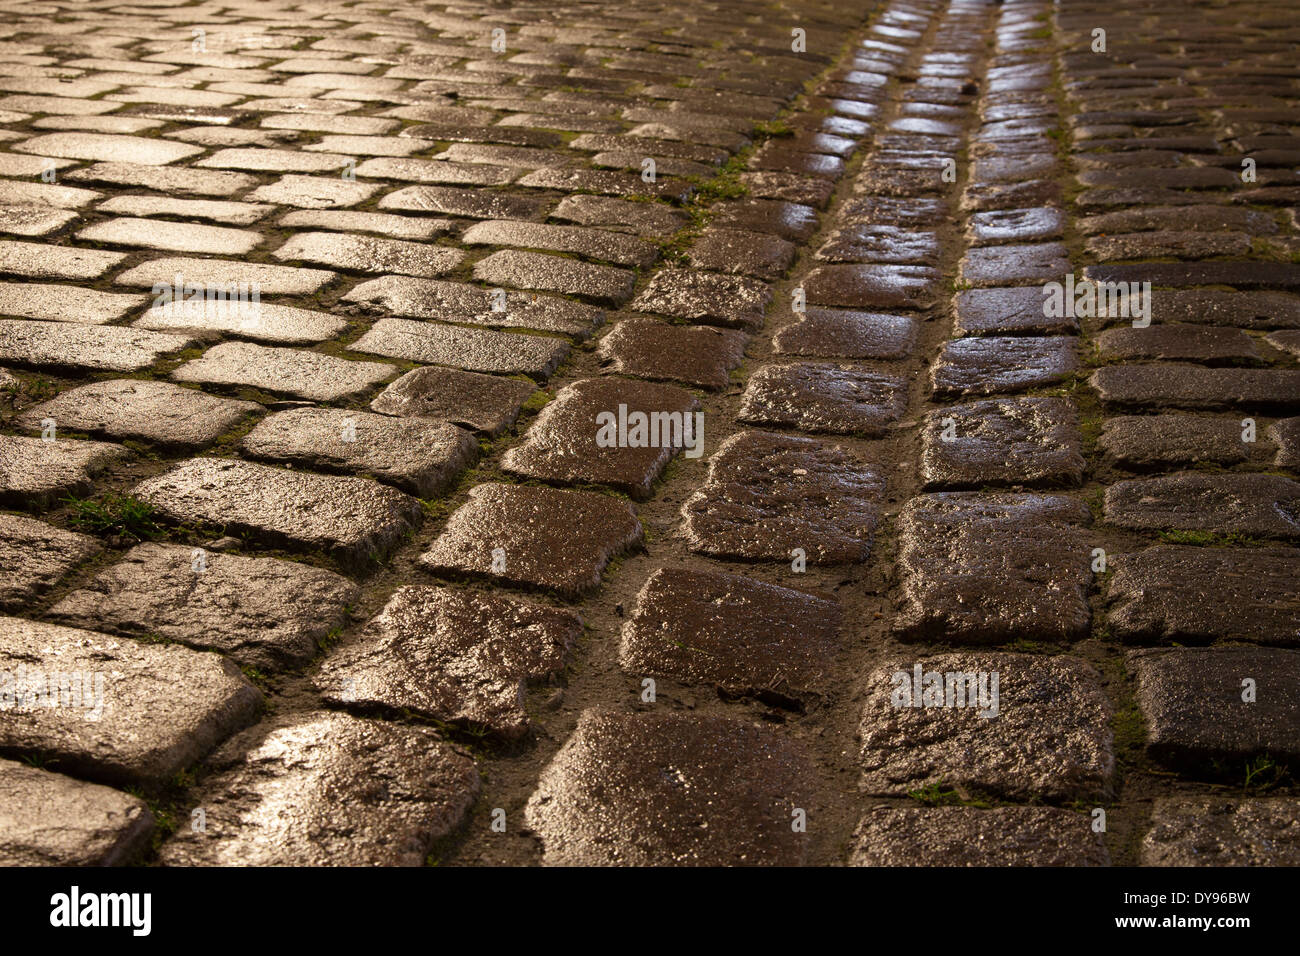 Germany, Munster, Wet cobblestone pavement Stock Photo